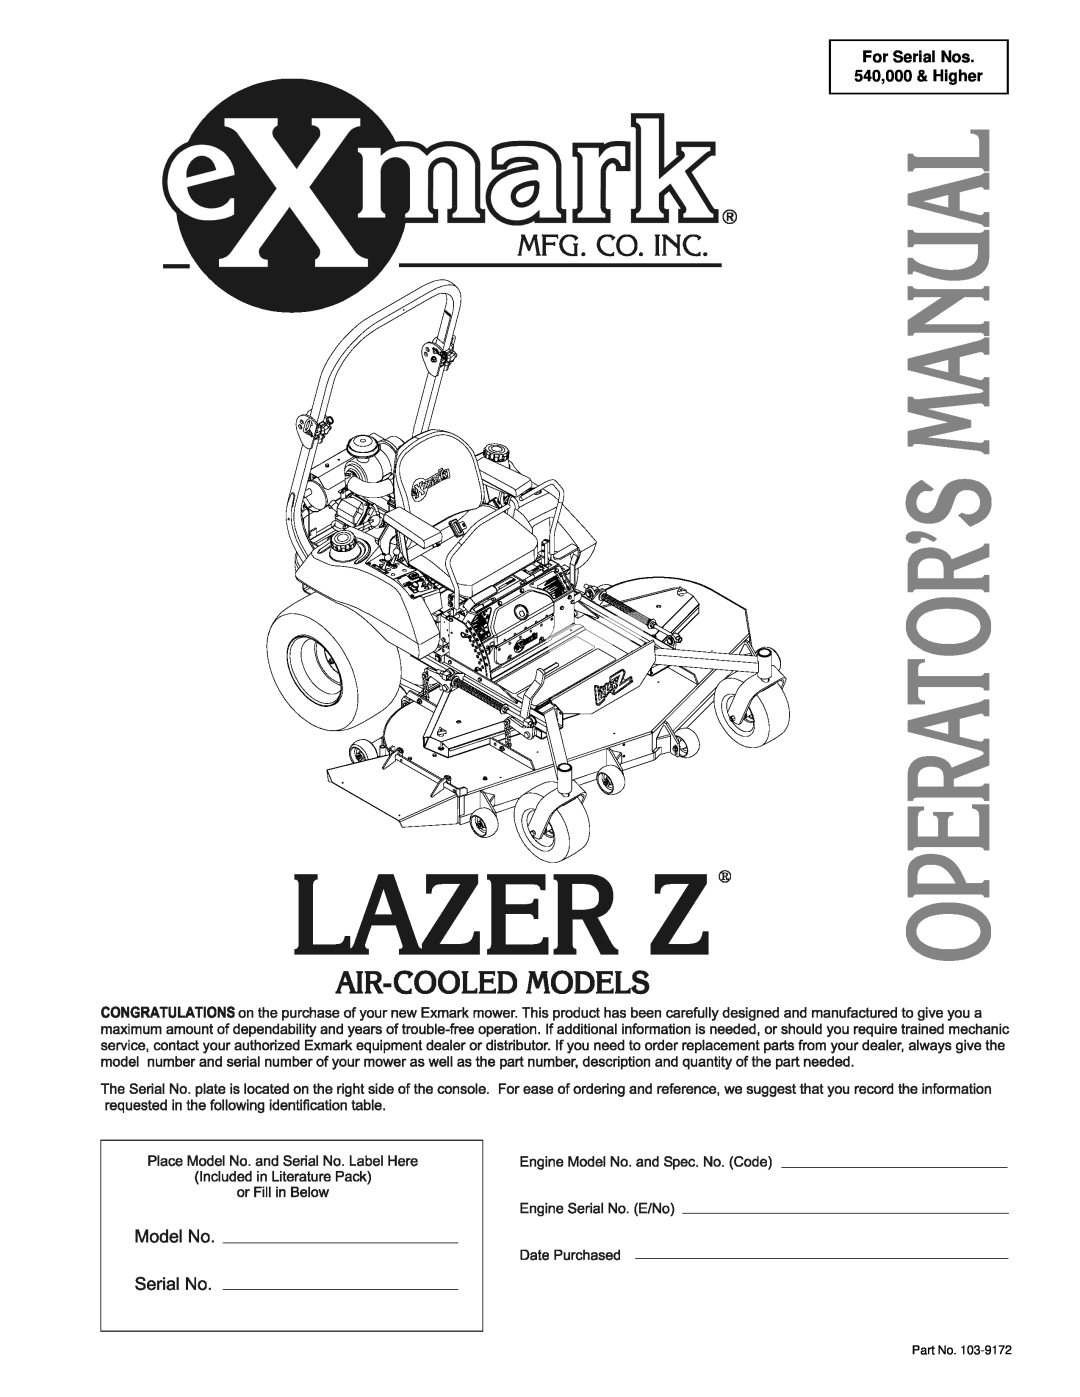 Exmark LAZER Z HP manual For Serial Nos 540,000 & Higher 